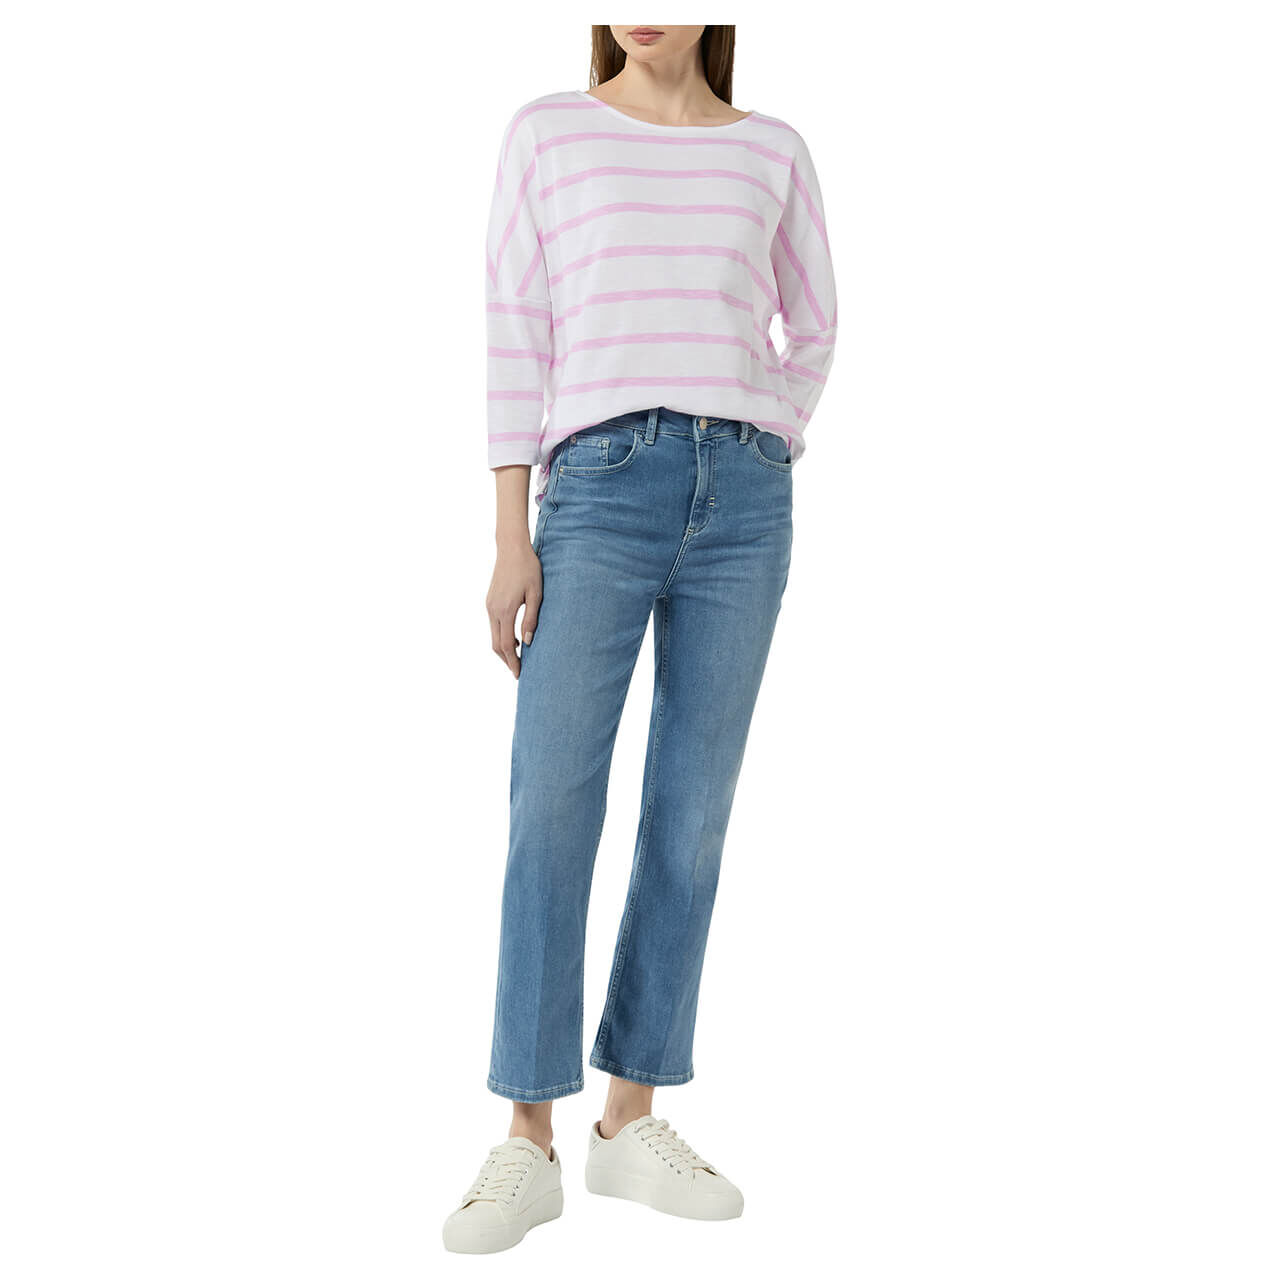 Comma Damen 3/4 Arm Shirt lilac pink stripes